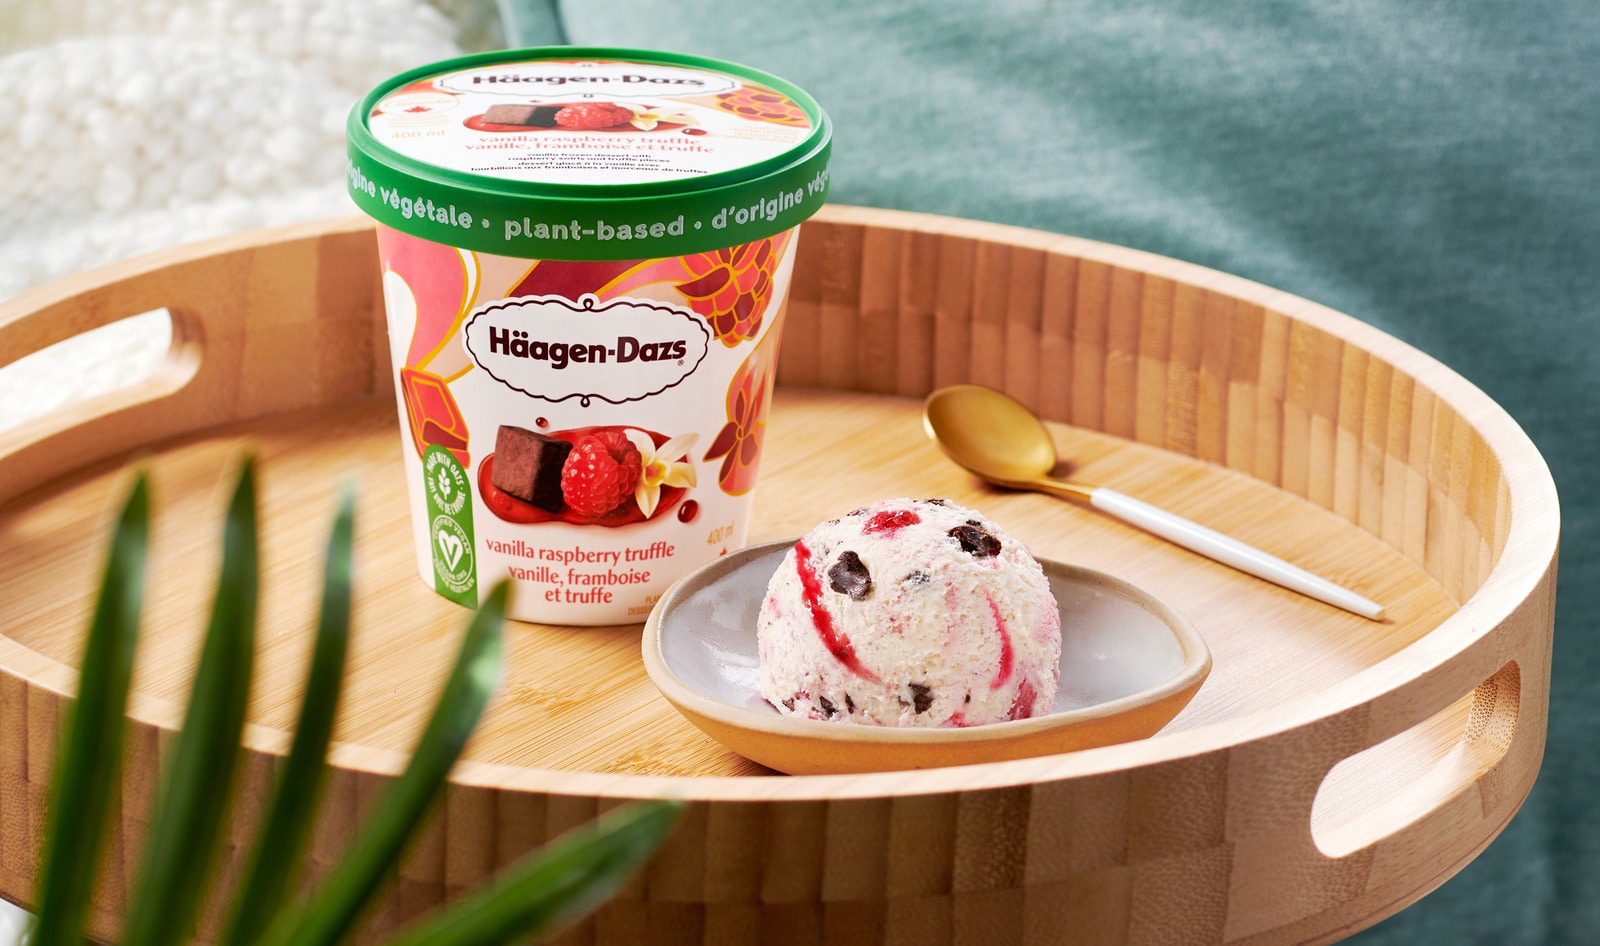 Häagen-Dazs Debuts Its First Dairy-Free Oat Milk Ice Cream in 3 Flavors